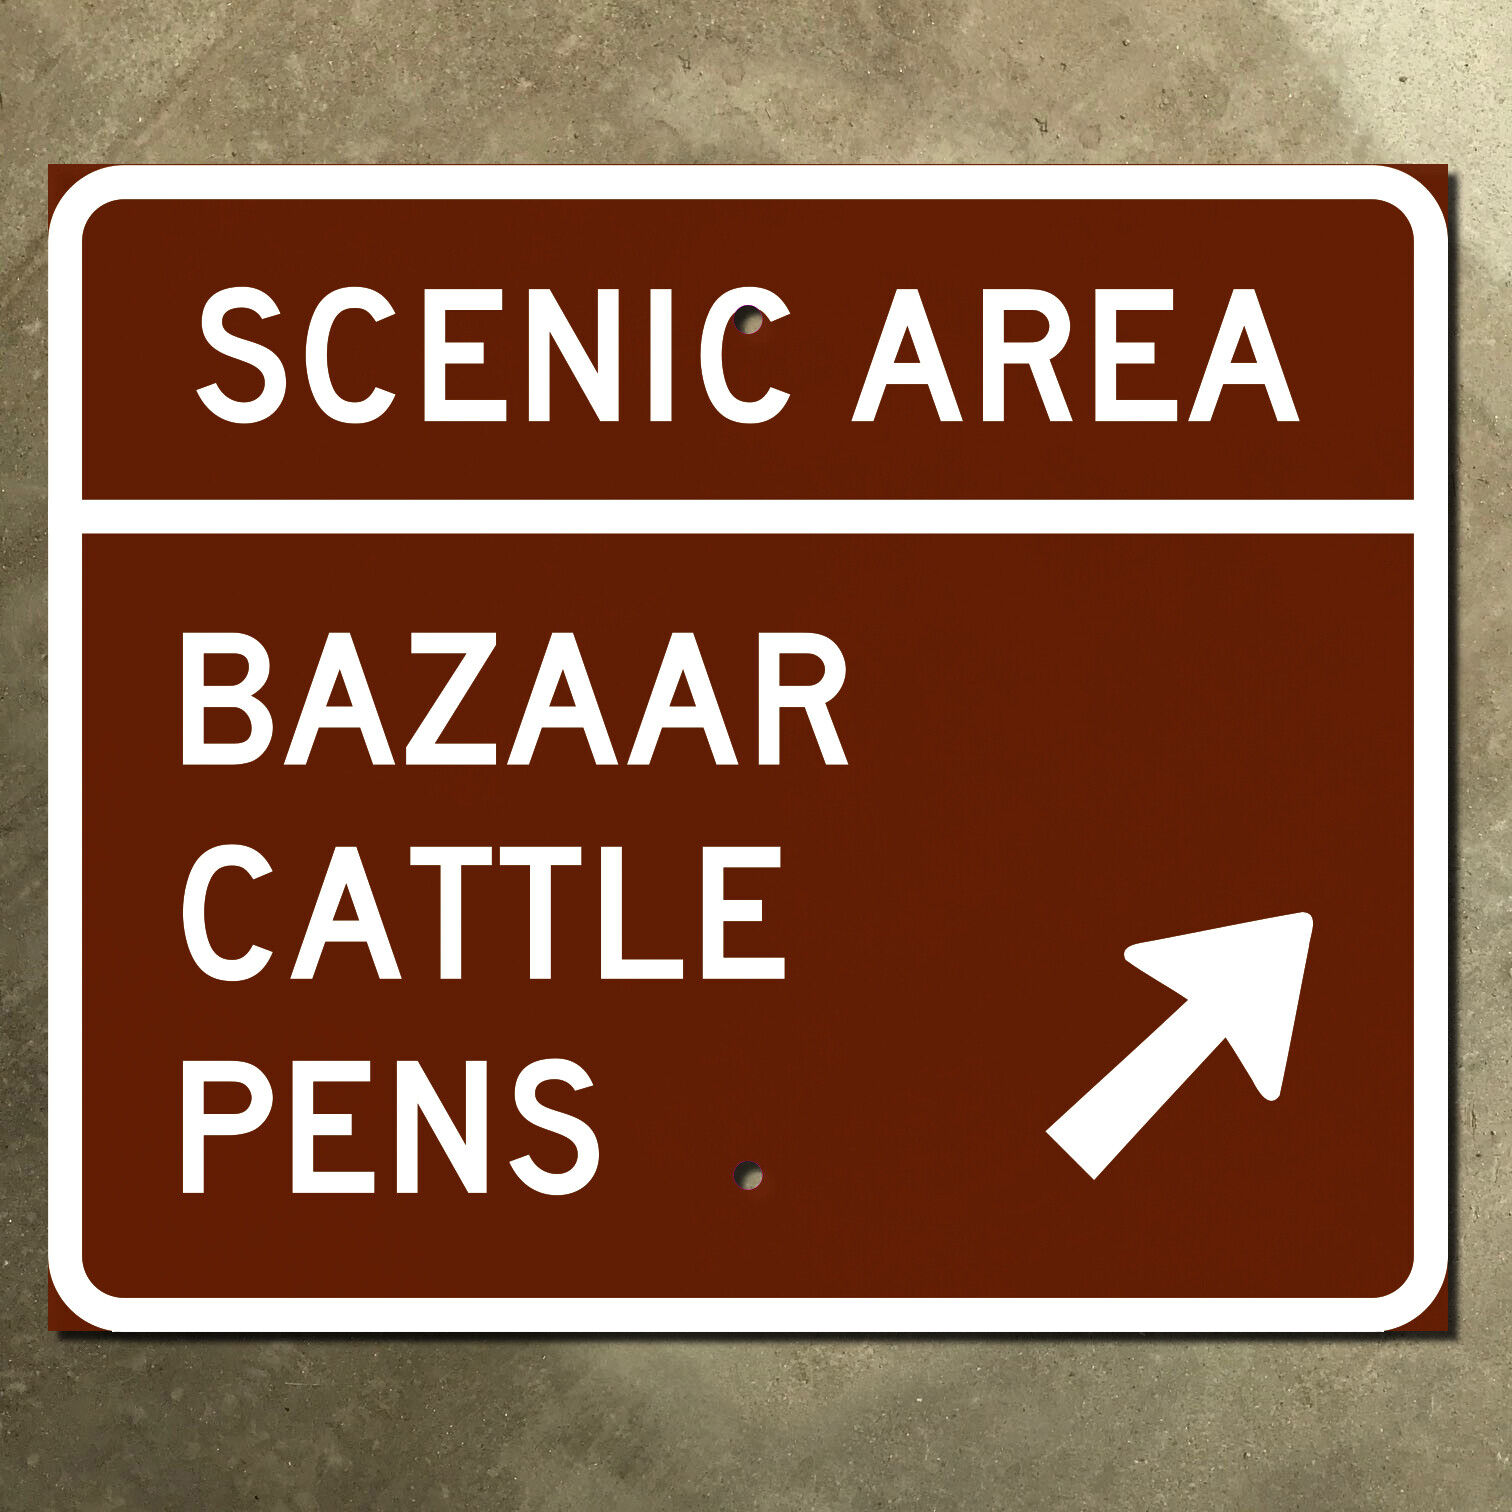 Kansas Bazaar Cattle Pens highway marker road guide sign scenic area brown 18x15